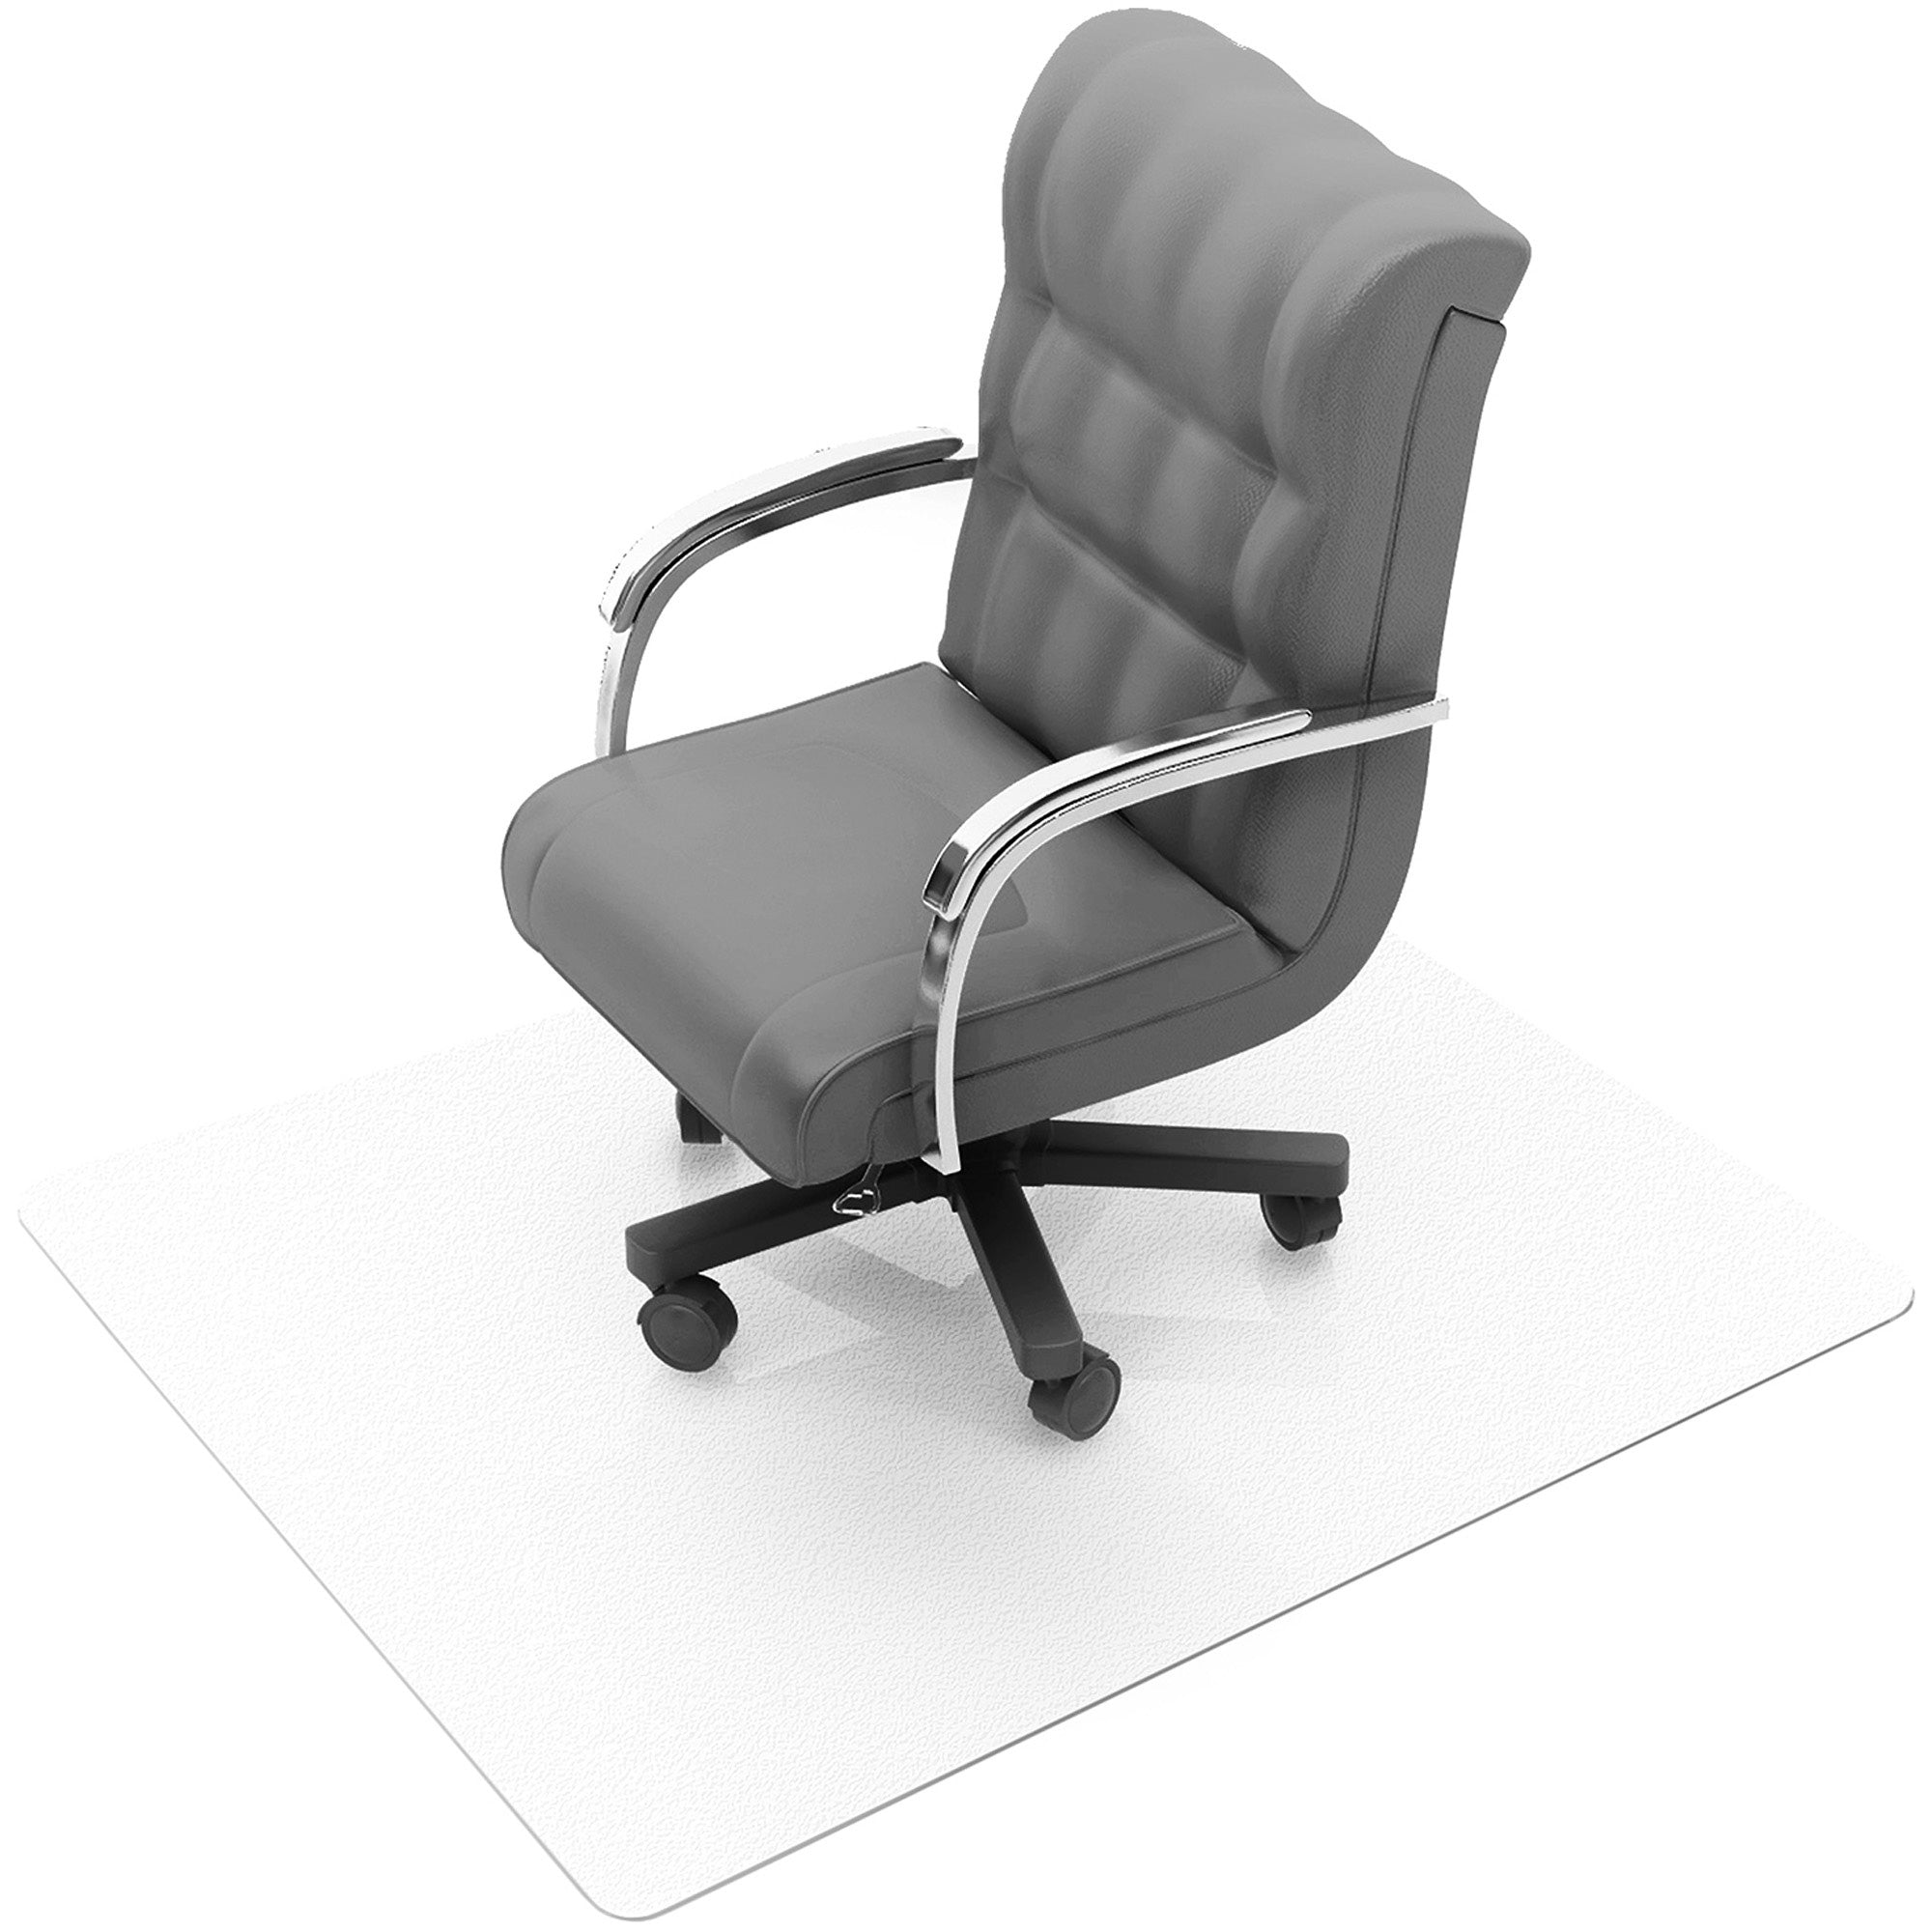 Cleartex Unomat Anti-Slip Rectangular Chair Mat Hard Floors and Carpet Tiles - 48" x 53" - Clear Rectangular Anti-Slip Polycarbonate Chair Mat for Hard Floors and Carpet Tiles - 53" L x 48" W x 0.075" D - 